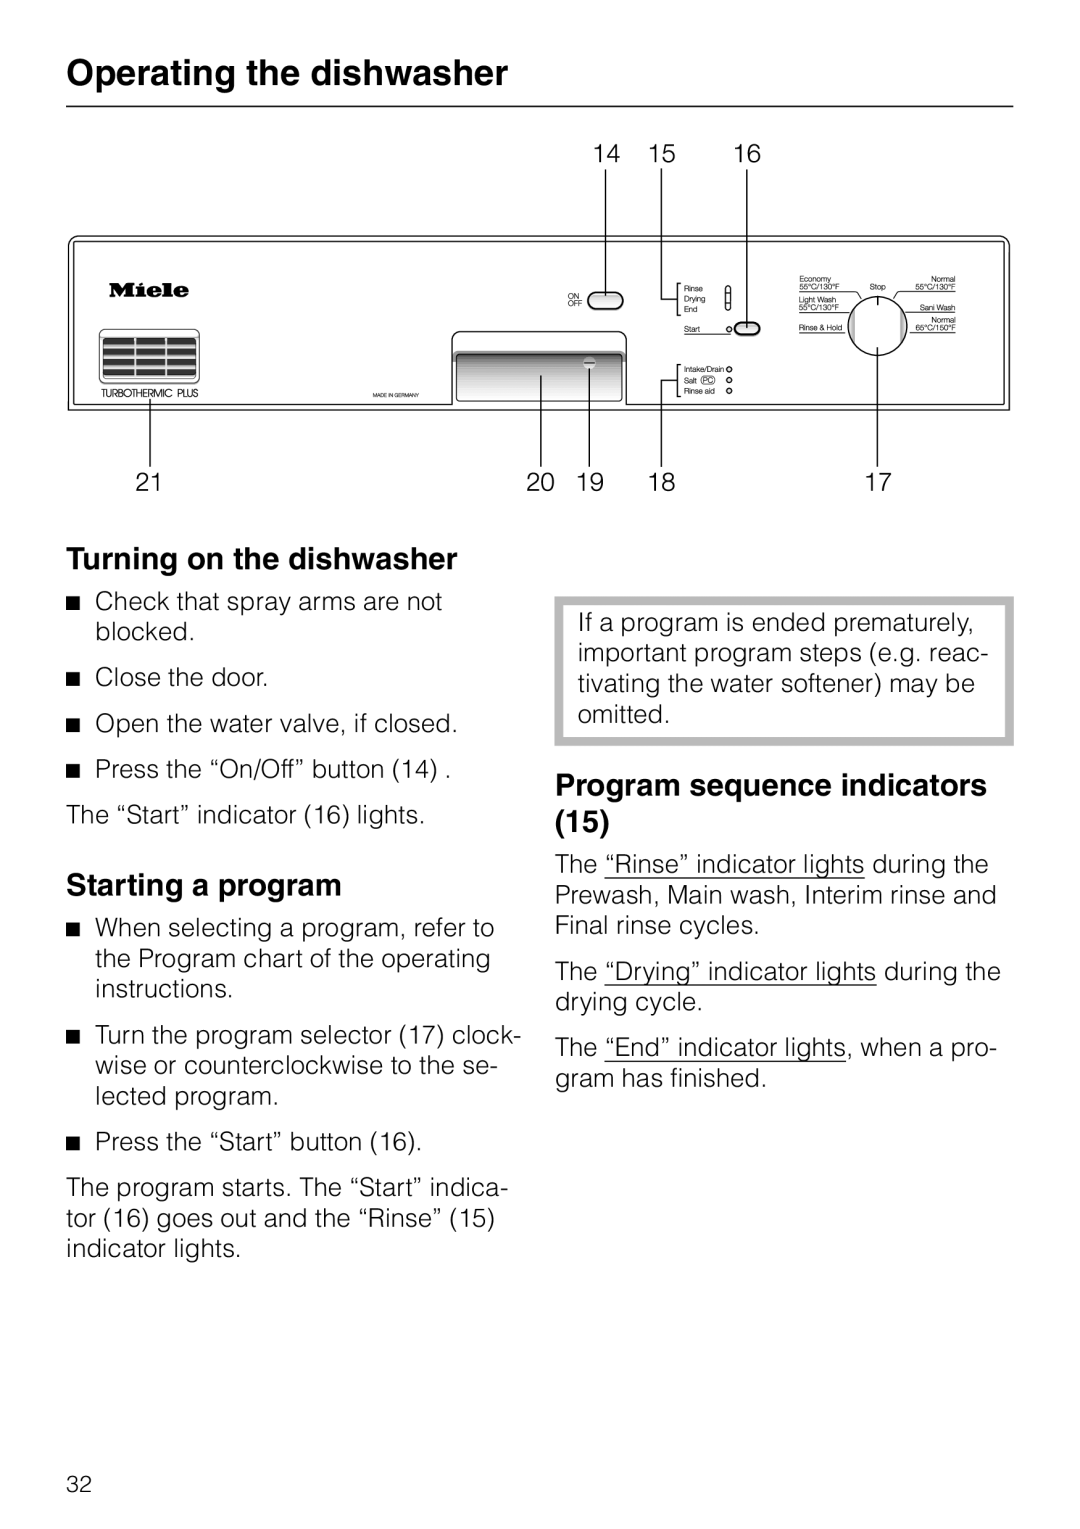 Miele G848 manual Operating the dishwasher, Turning on the dishwasher, Starting a program, Program sequence indicators 